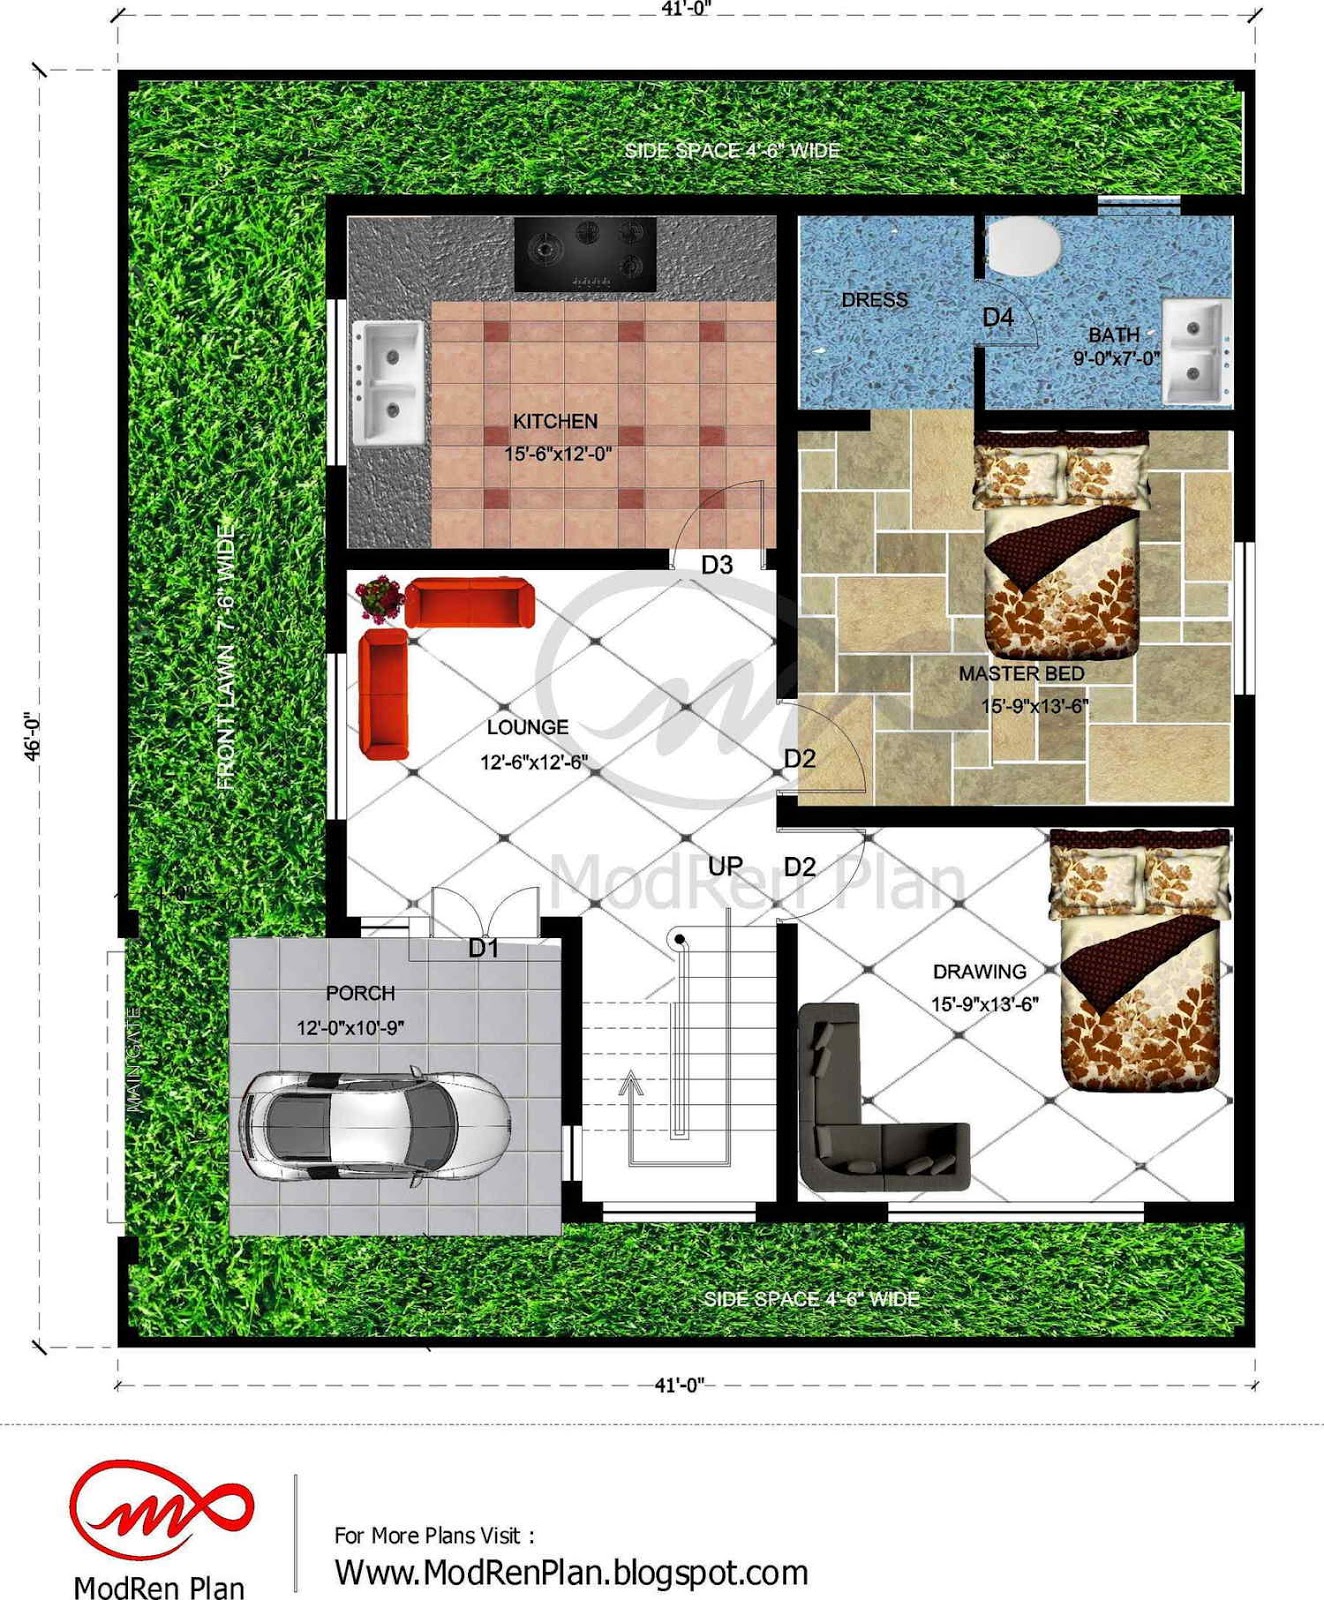 7 marla house plan 1800 sq ft 46x41 feetwww.modrenplan